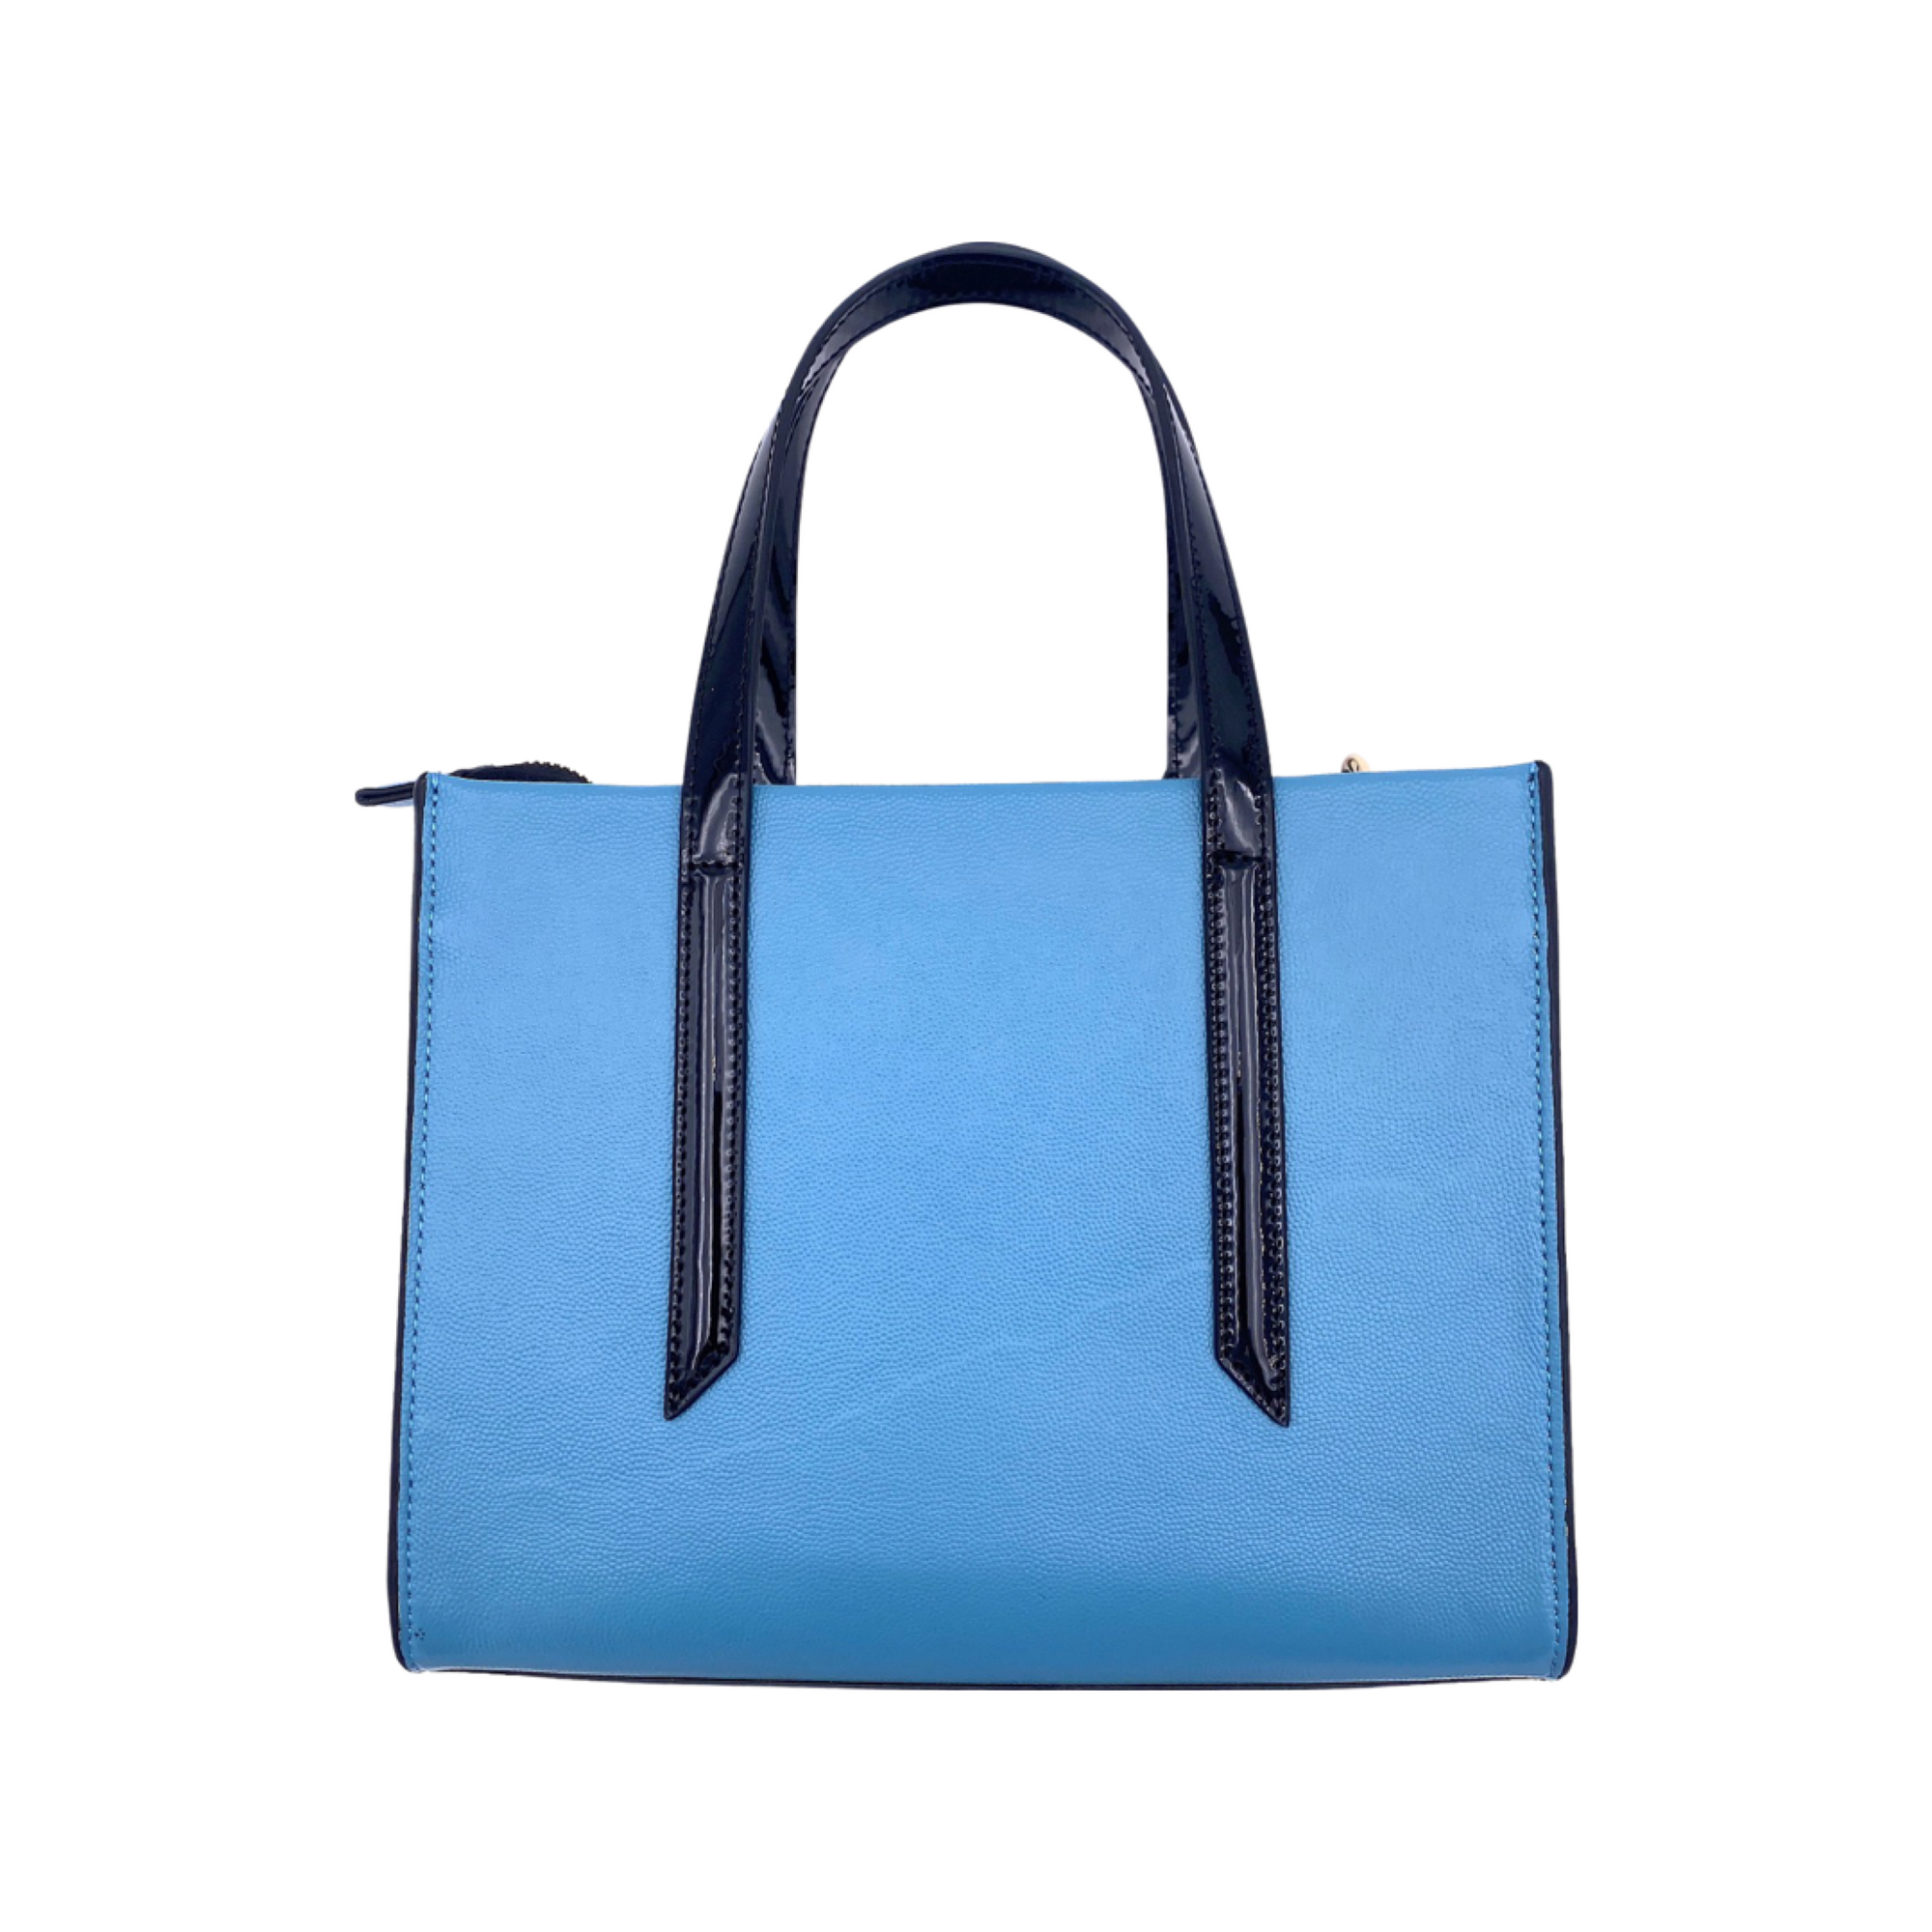 Park Avenue Bag in Blue